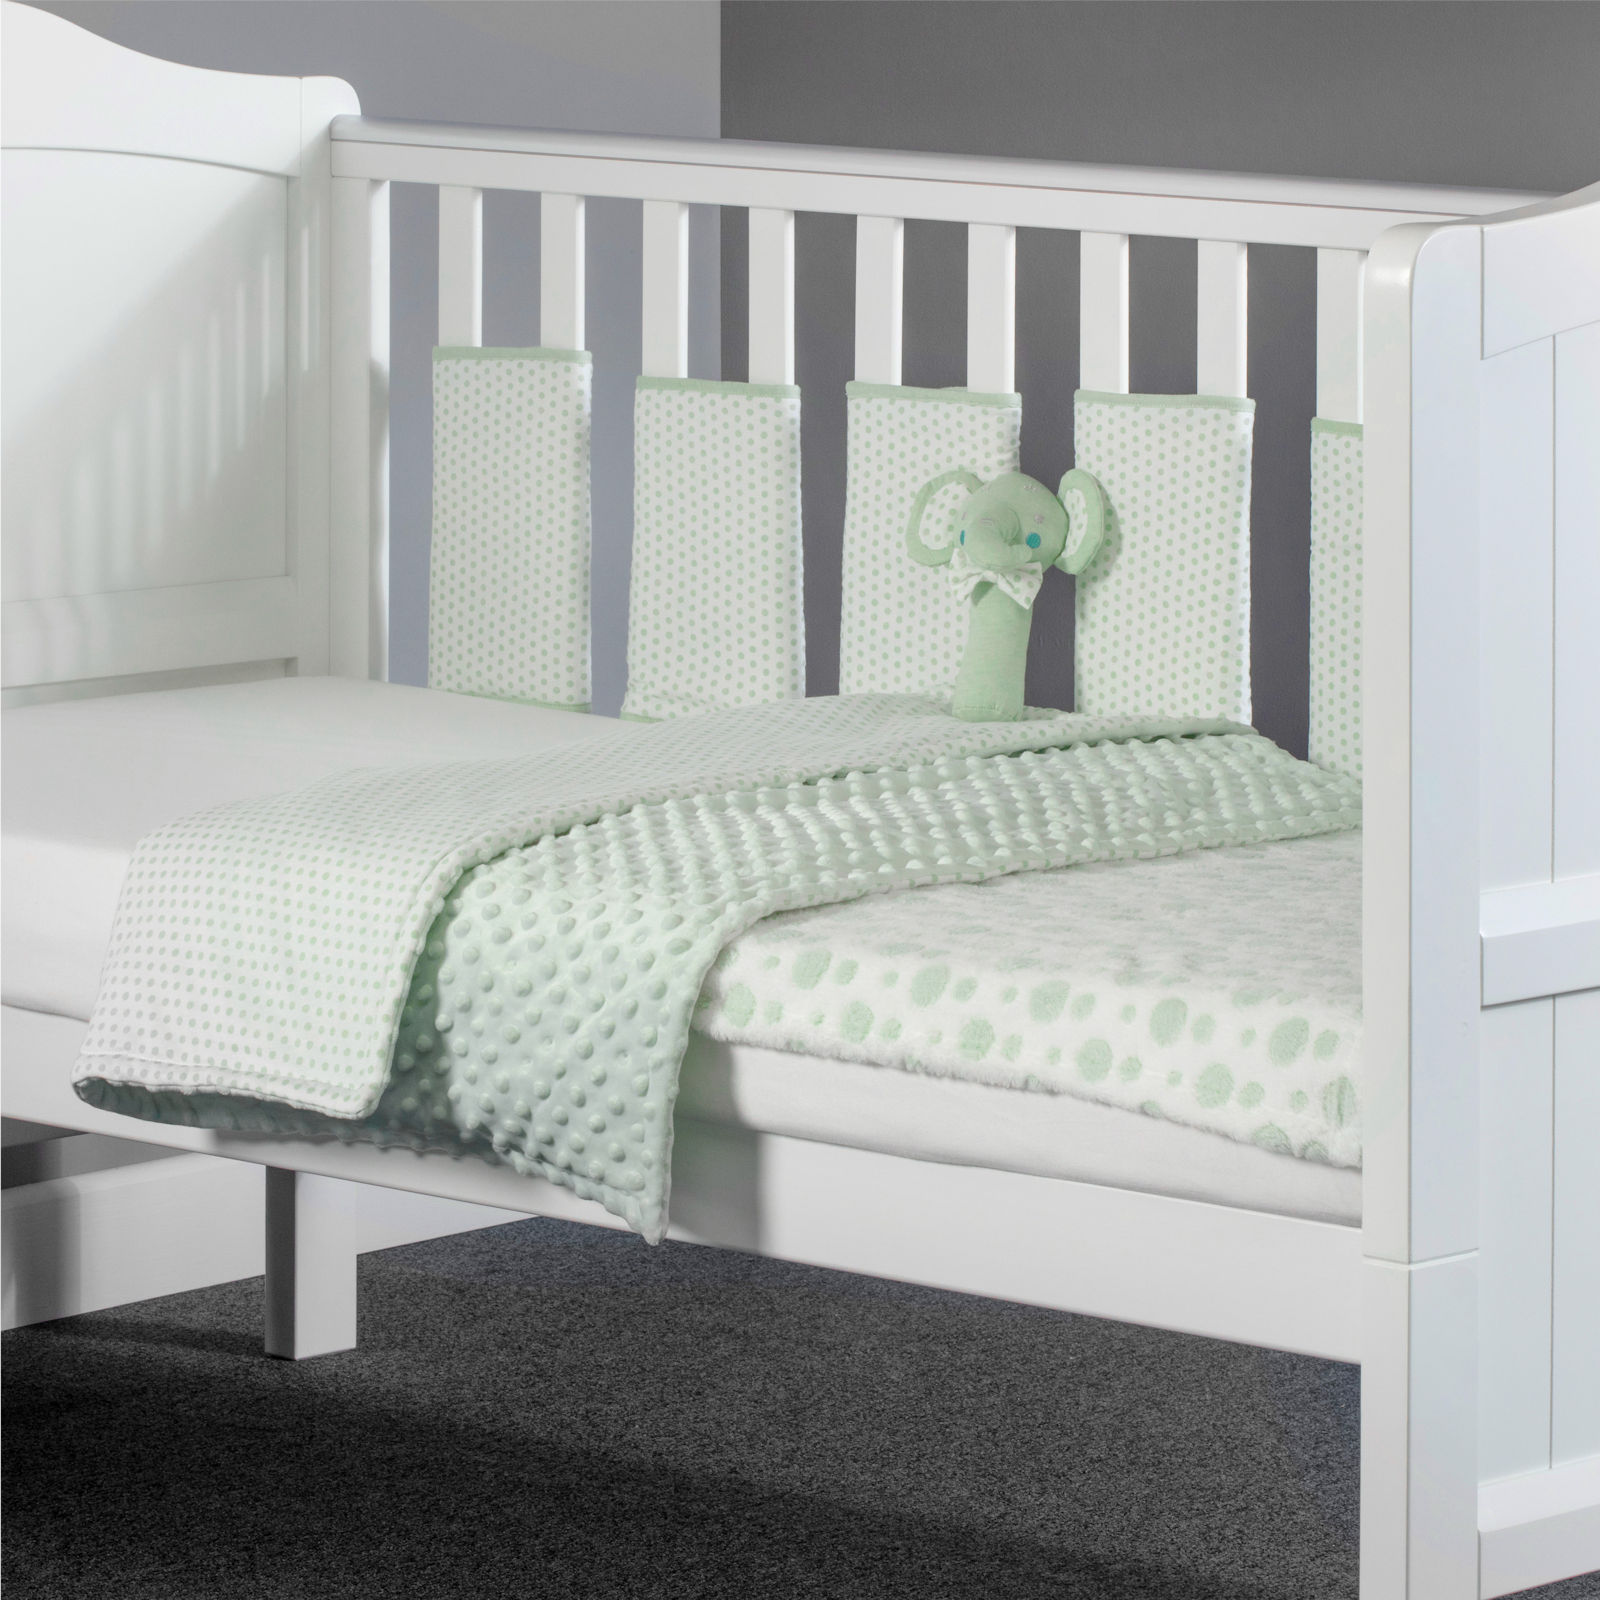 Miniuno Little Ellie Elephant 5 Piece Cot / Cot Bed Quilt, Bumper, Blanket Bedding Set - Sage Spots